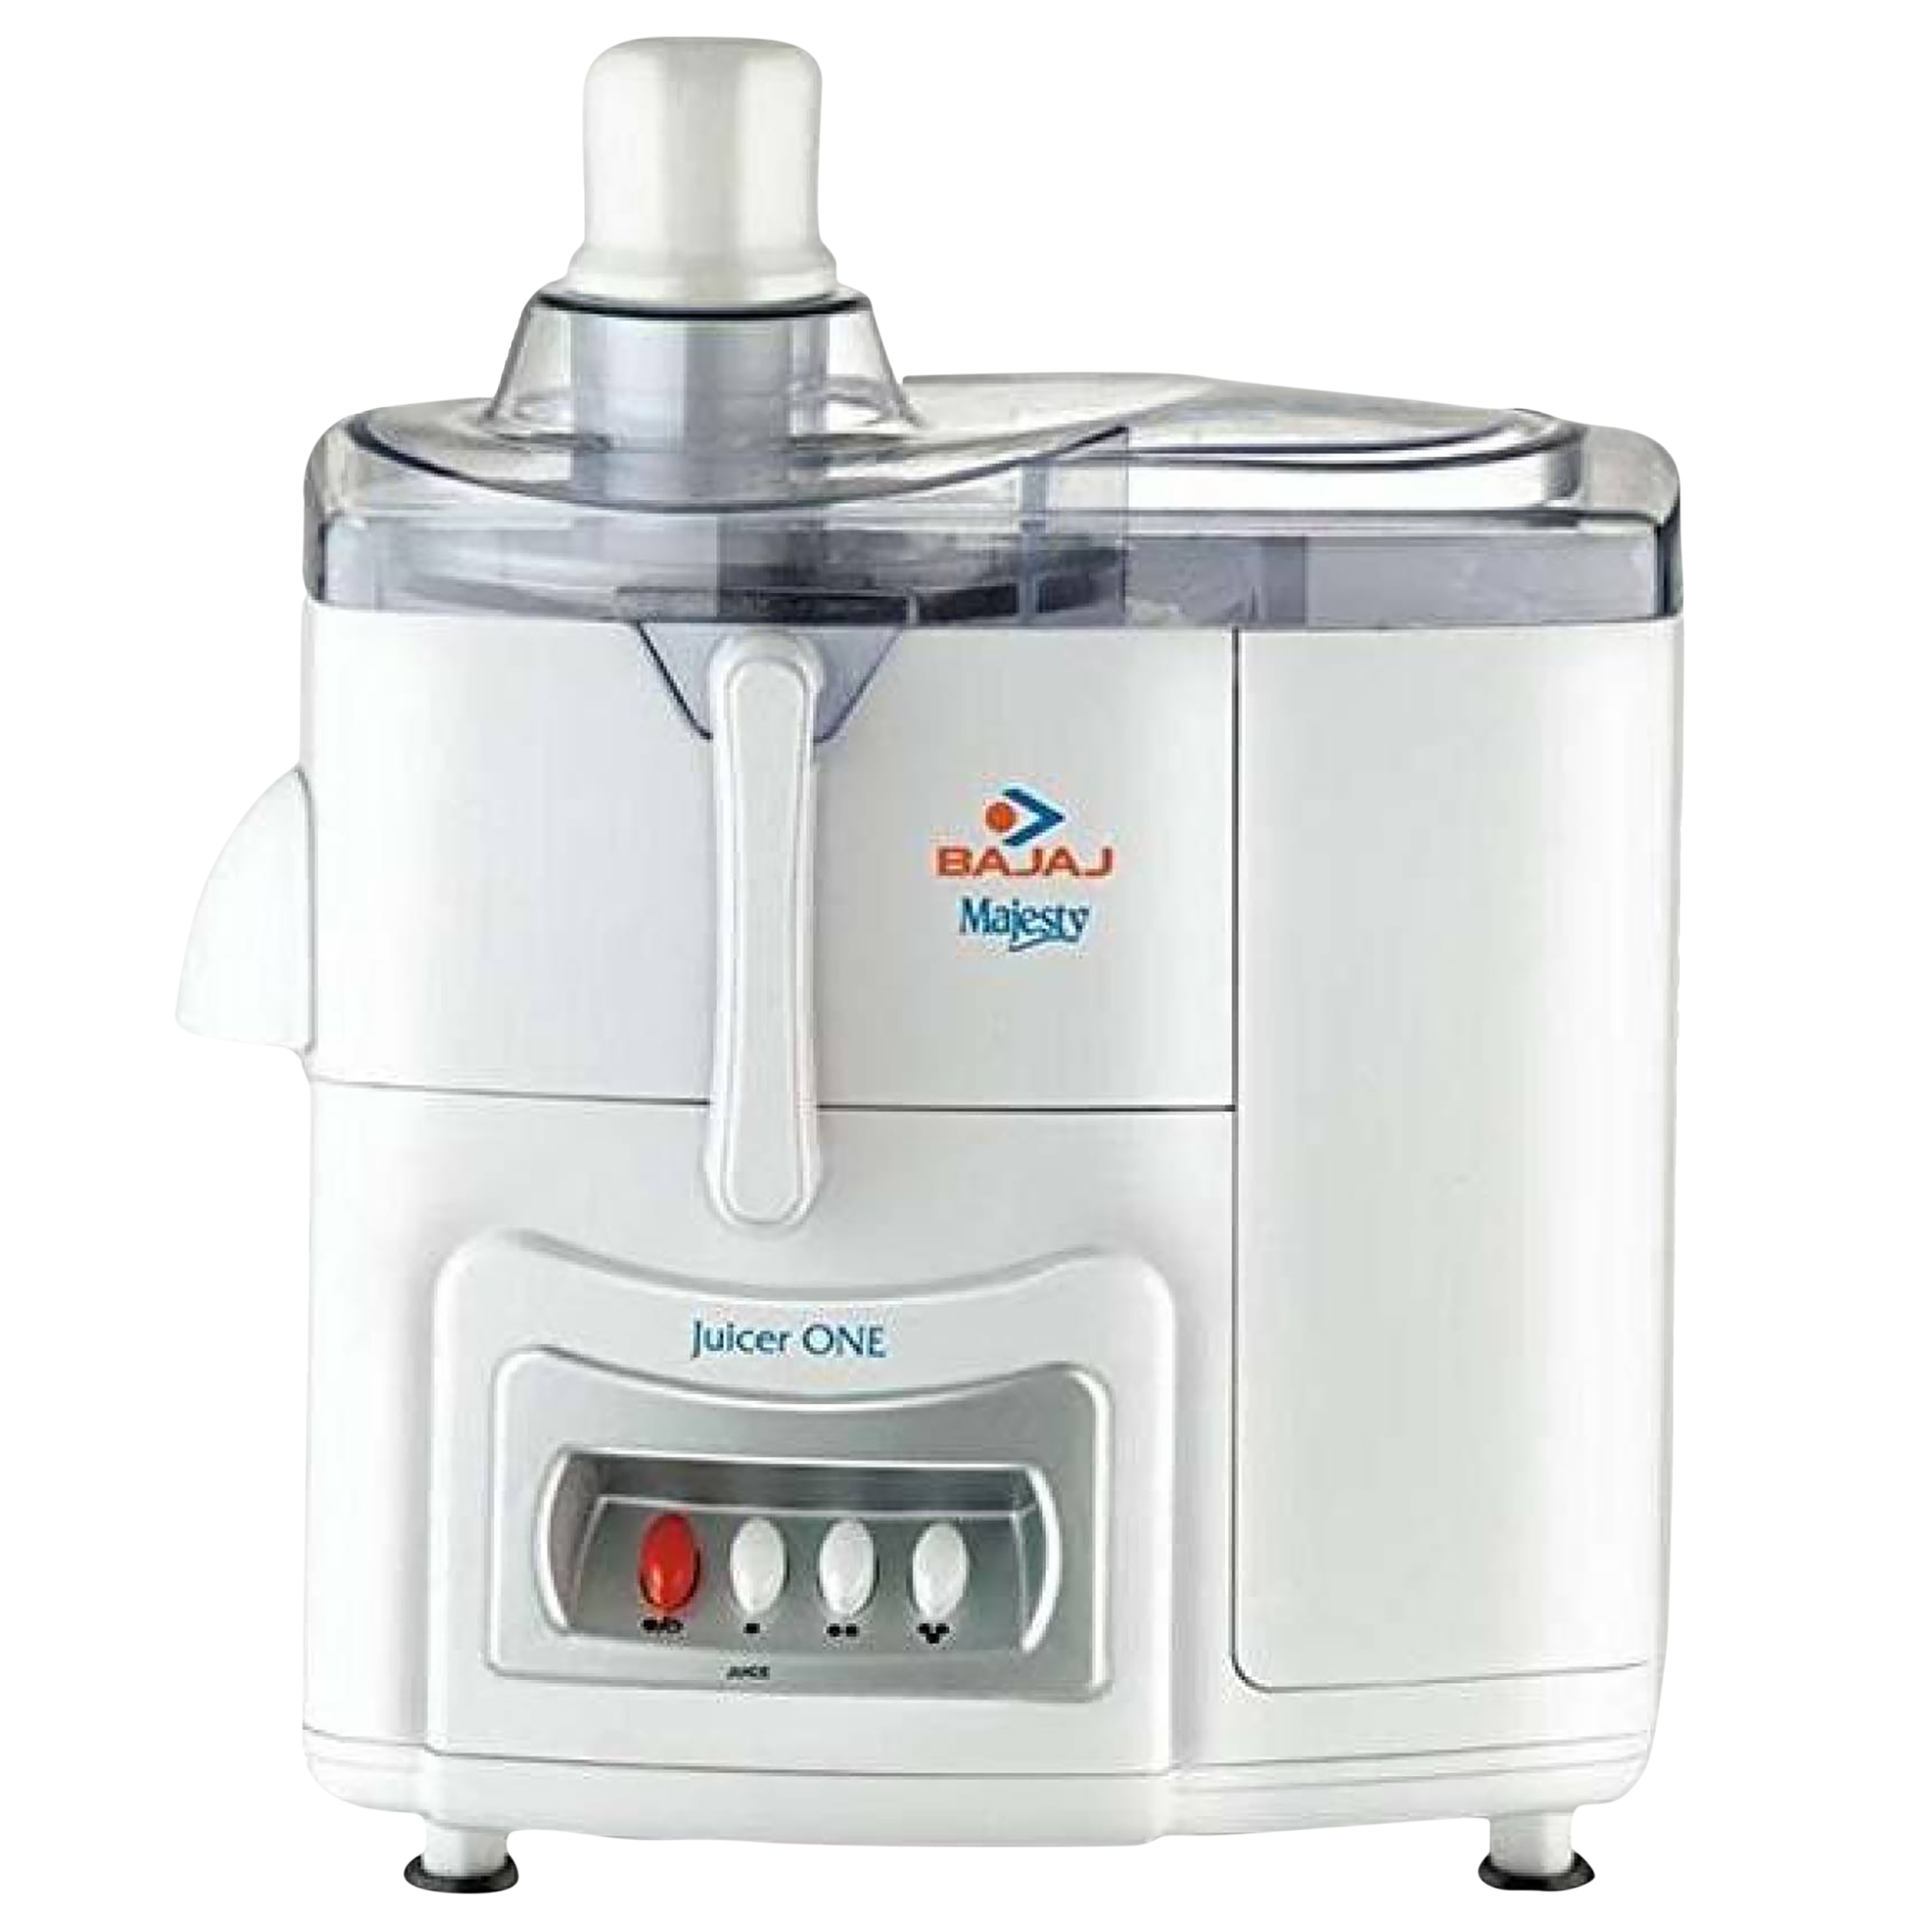 Bajaj Majesty Juicer One 500 Watt Juicer (18000 RPM, 3 Speed Control, White)_1